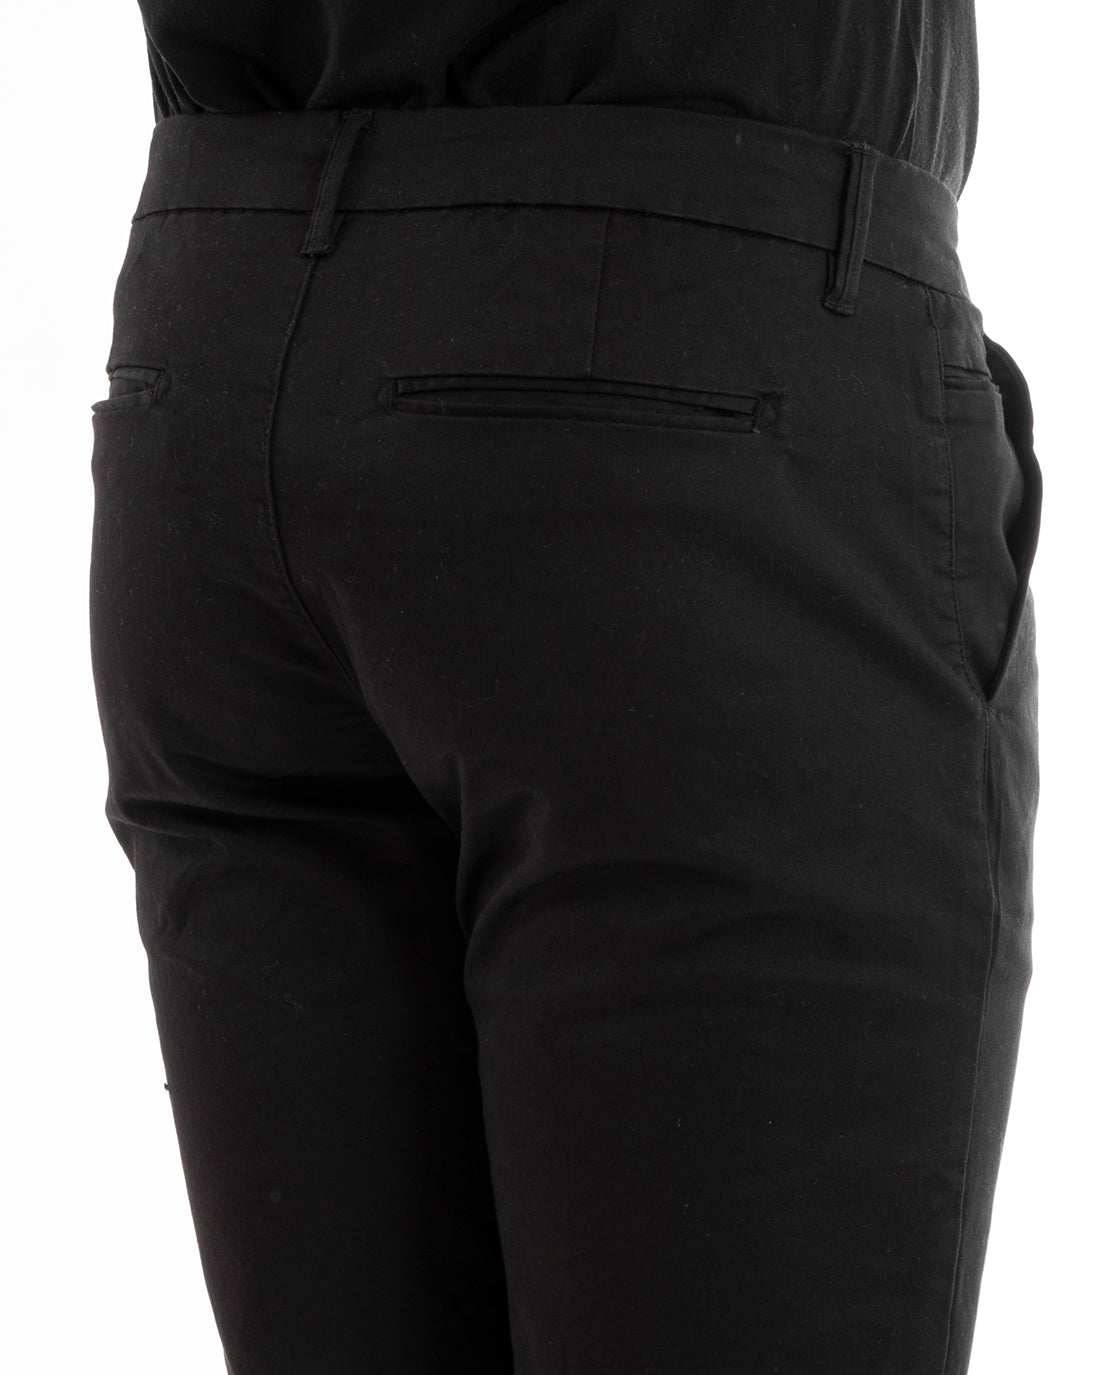 Pantaloni Uomo Cotone Raso Tasca America Slim Fit Tinta Unita Nero GIOSAL-P5969A